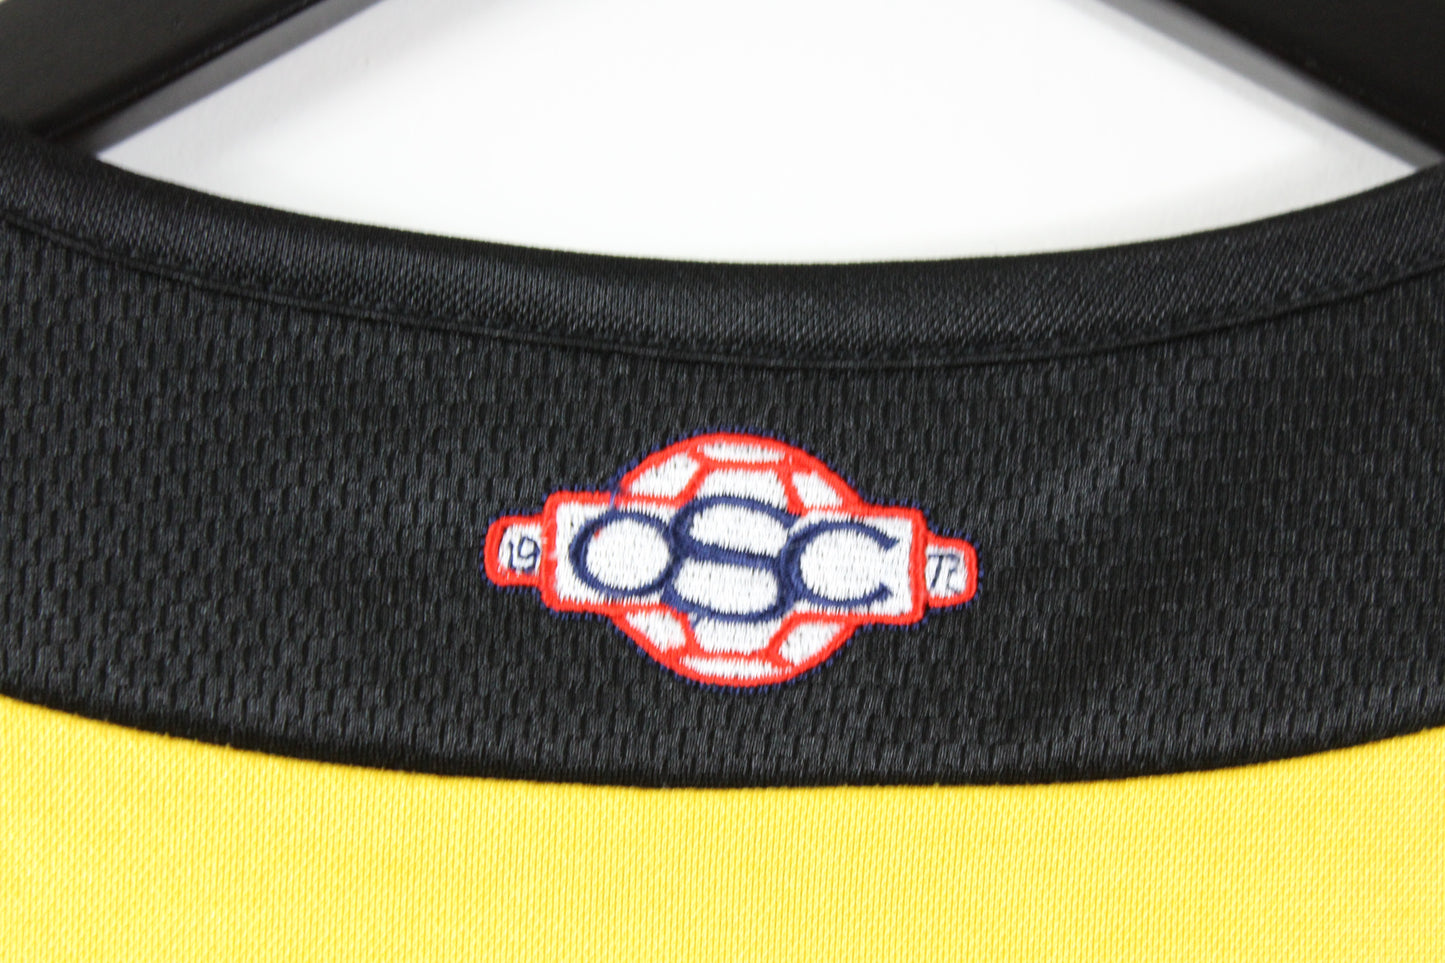 Oakville Soccer Club Jersey - Yellow & Black